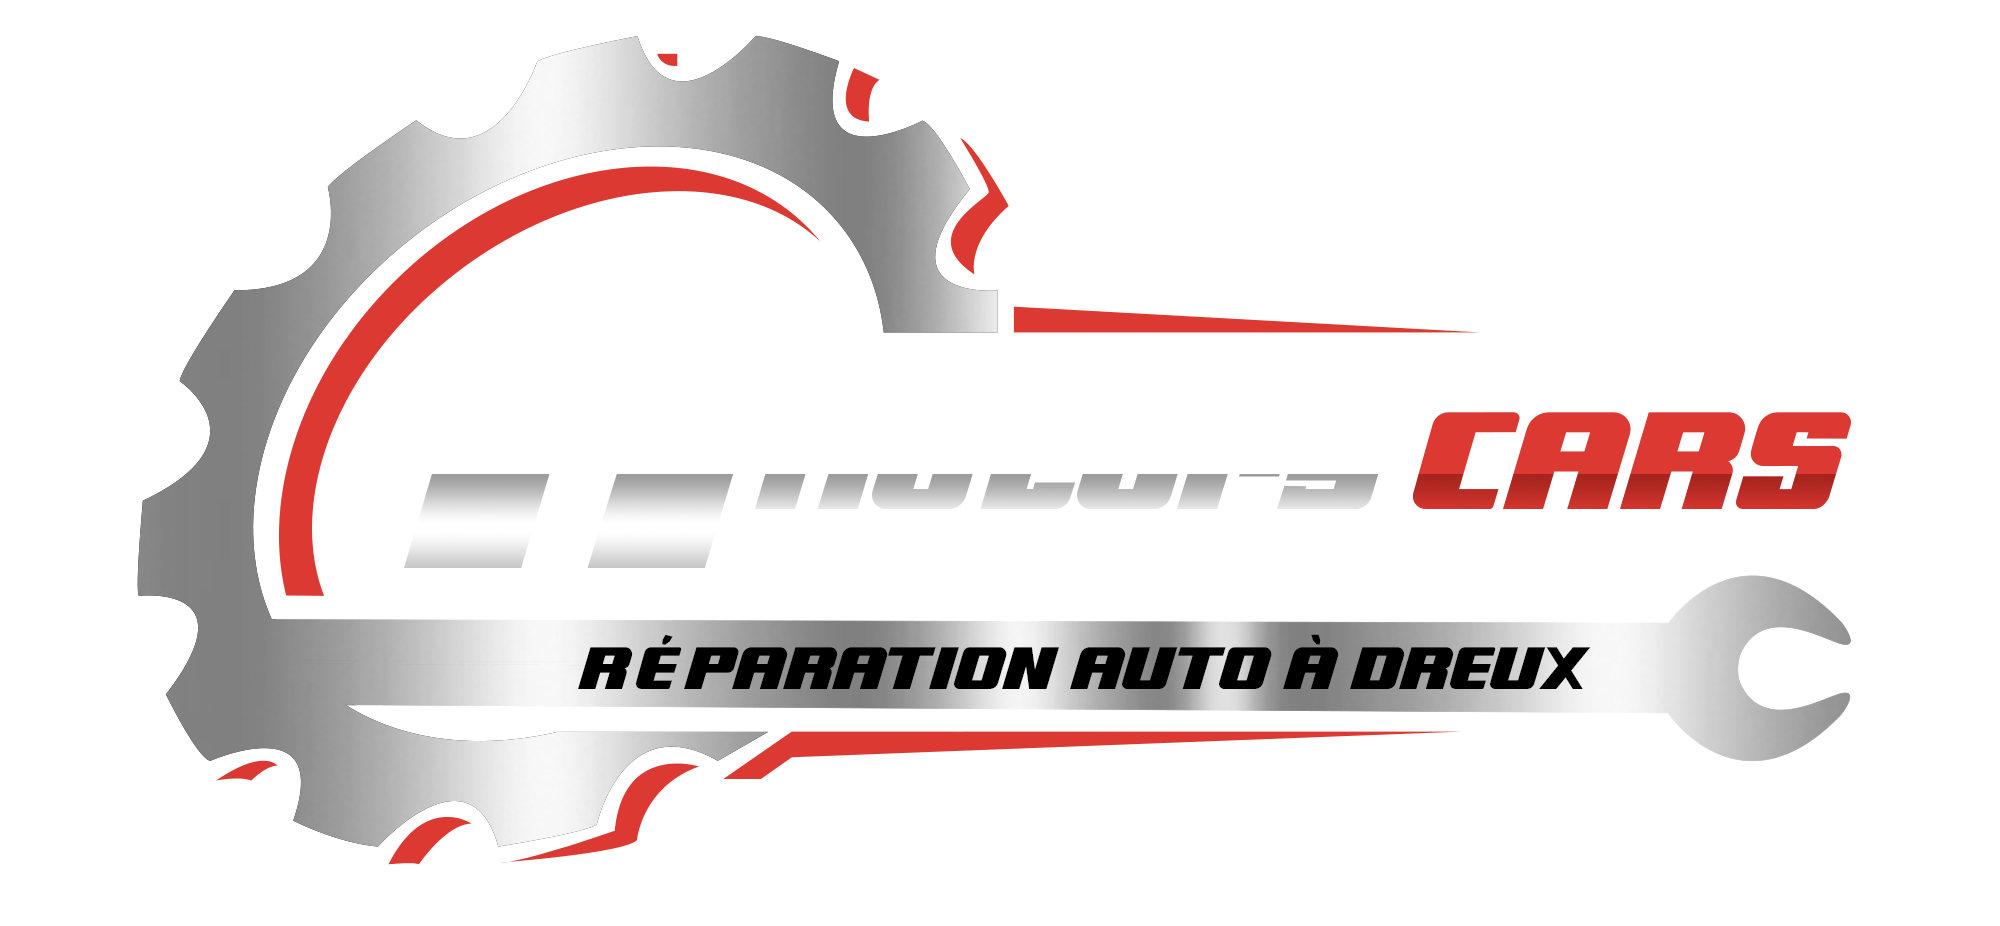 Mmotors CARS